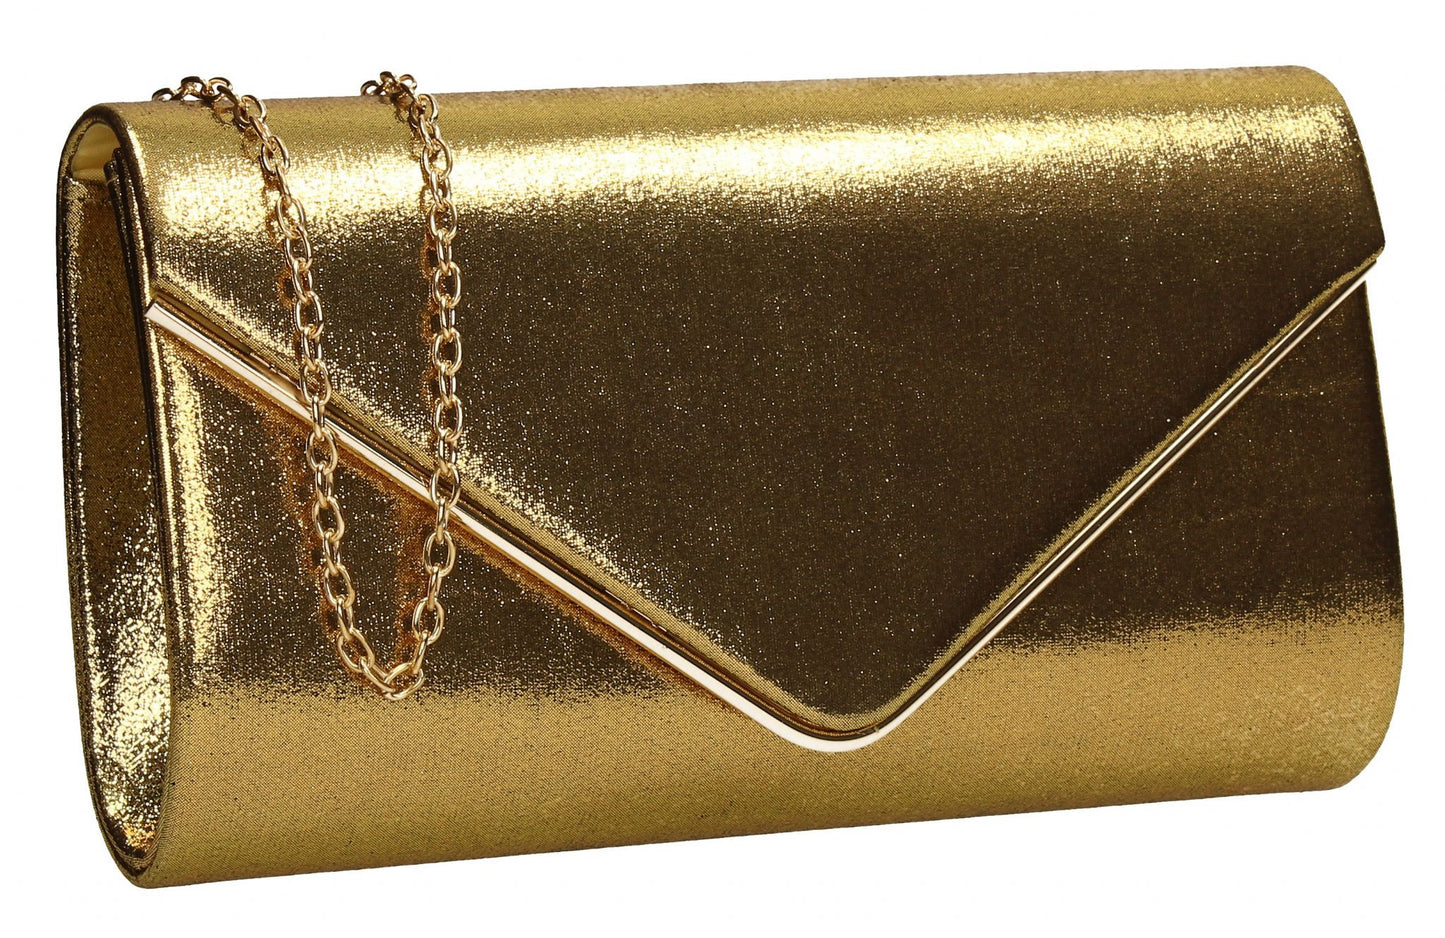 SWANKYSWANS Olivia Clutch Bag Gold Cute Cheap Clutch Bag For Weddings School and Work